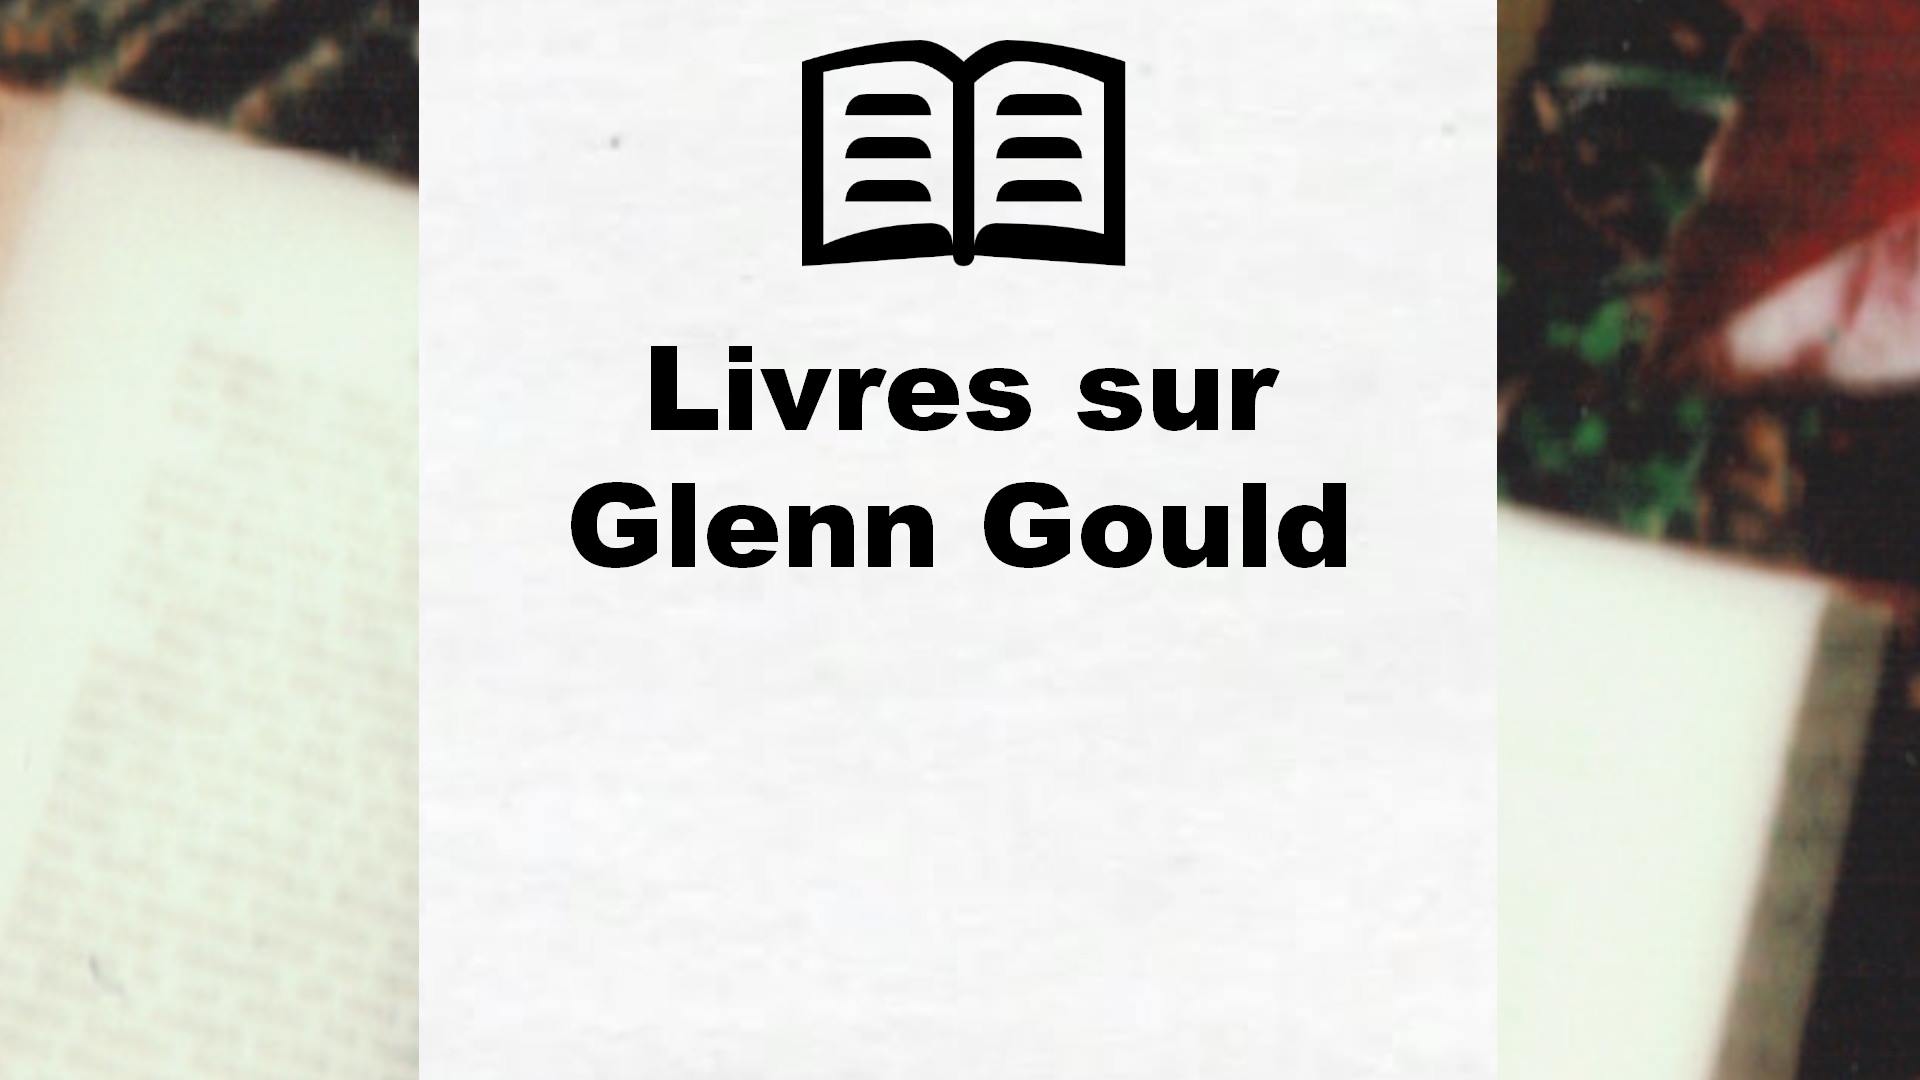 Livres sur Glenn Gould